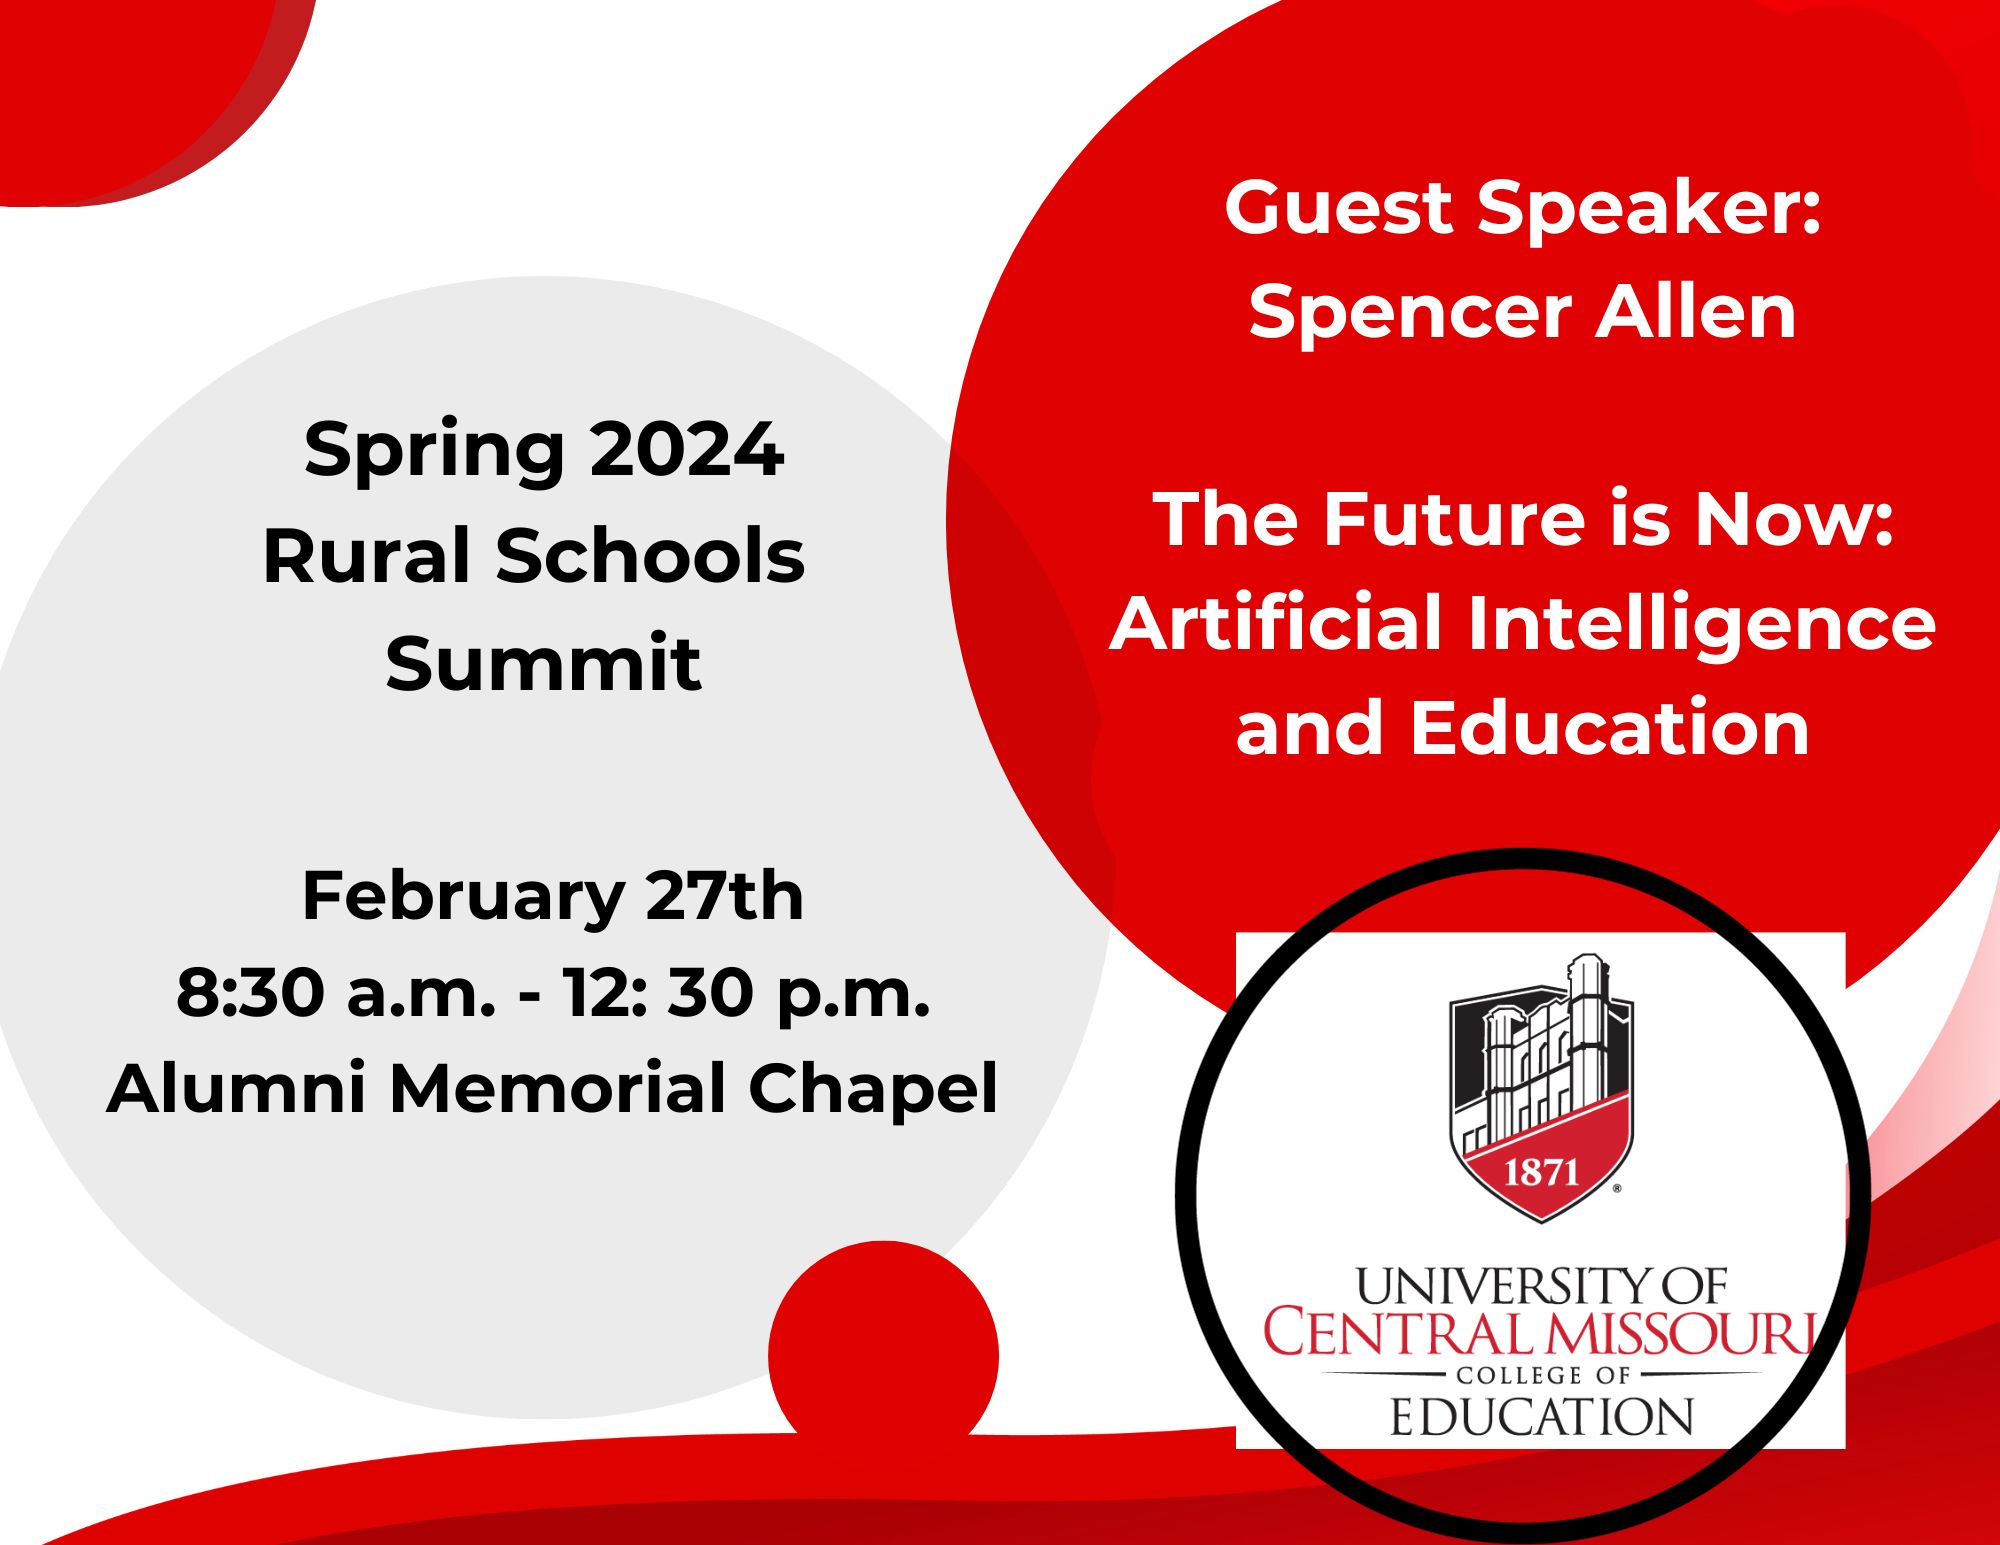 Spring 2024 Rural Schools Summit Information